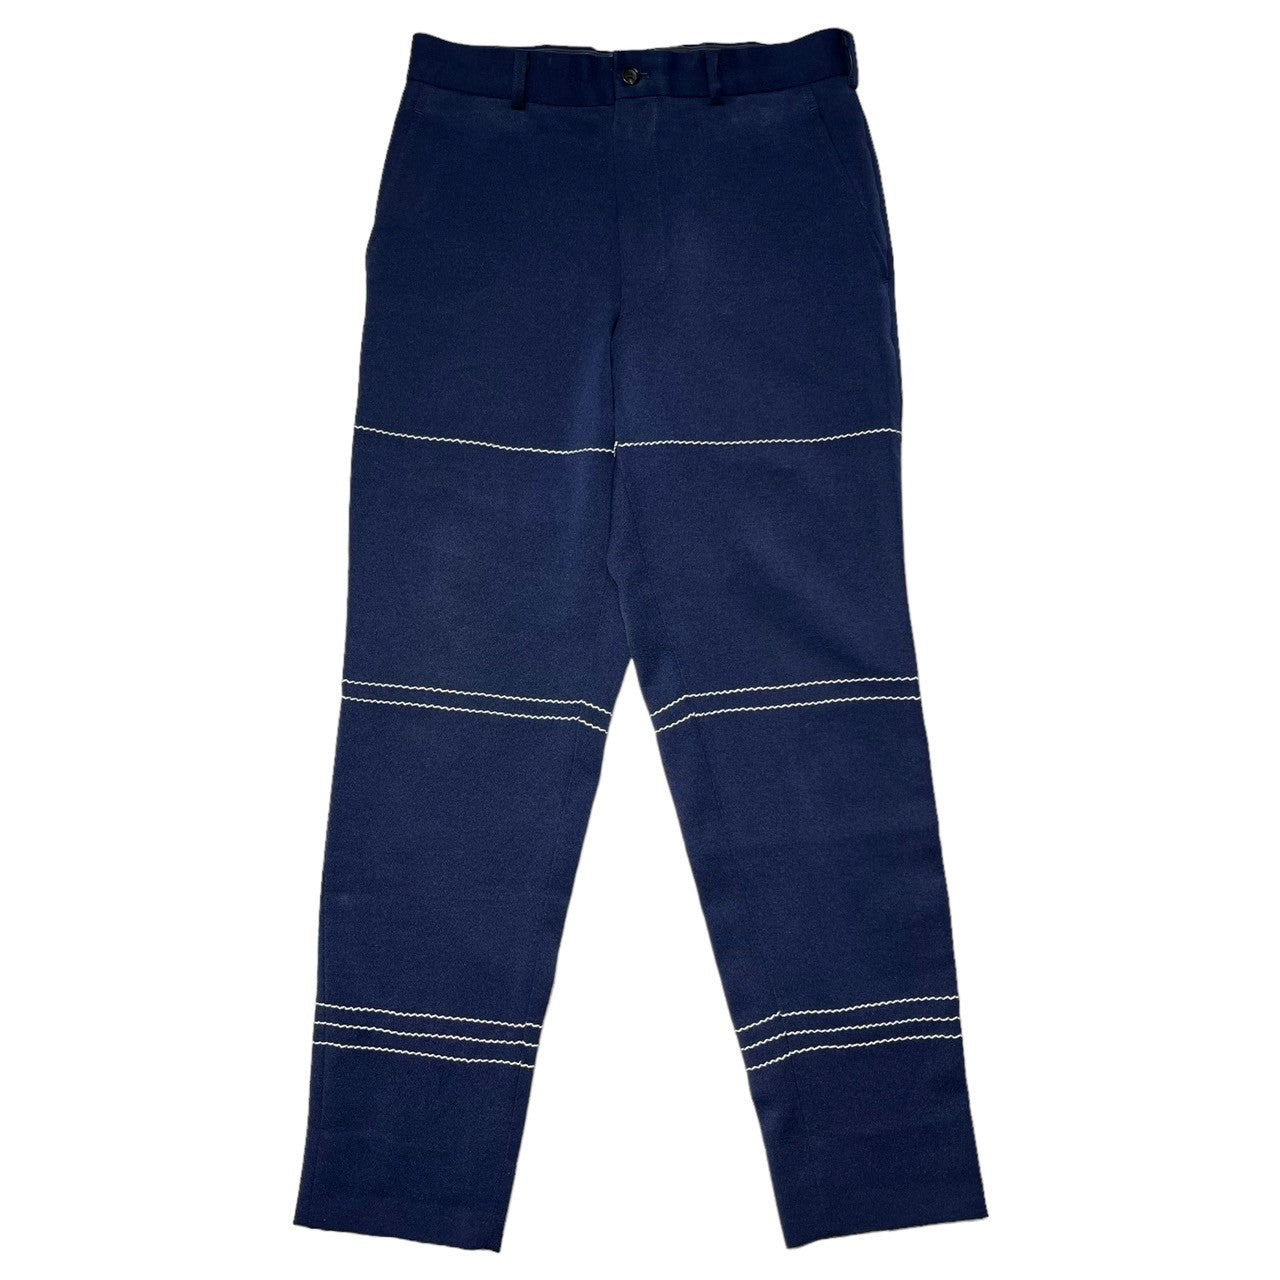 COMME des GARCONS HOMME PLUS(コムデギャルソンオムプリュス) 99AW Souvenir Kitsch stitch pants スーベニールキッチュ期 ステッチ パンツ PP-04003S S ネイビー AD1999 エルメス期 稀少品